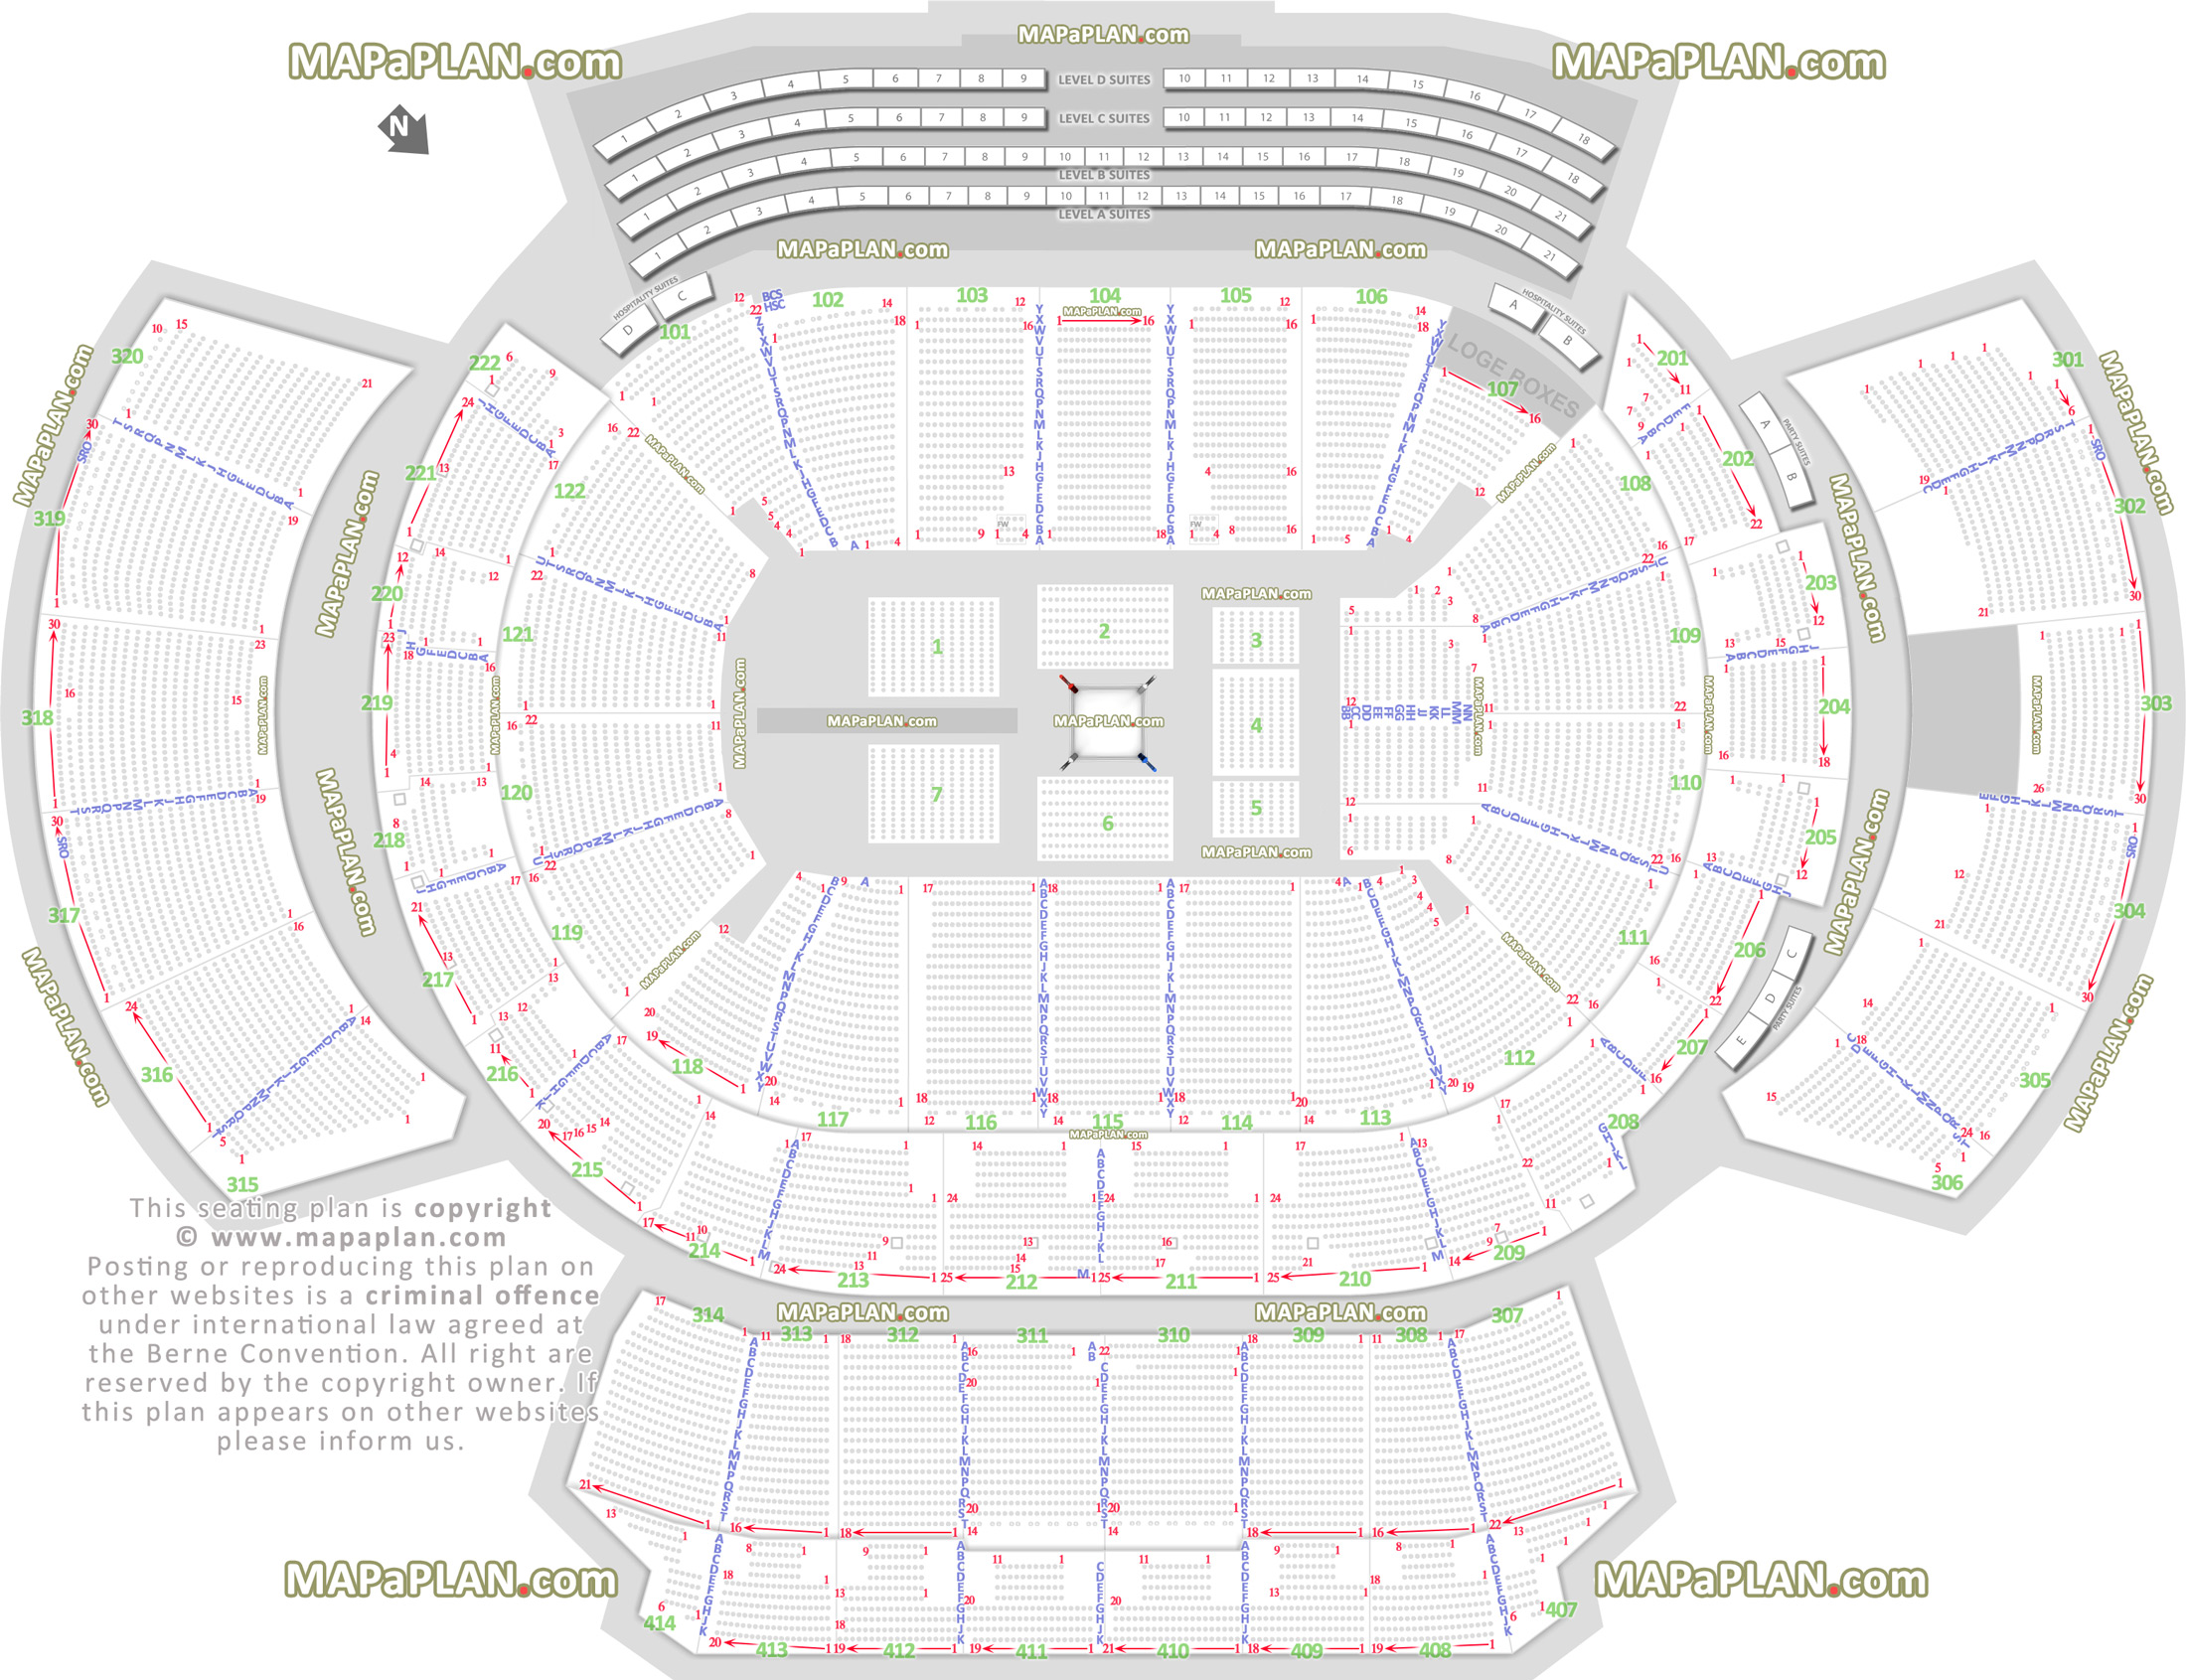 Arena Wwe Seating Chart